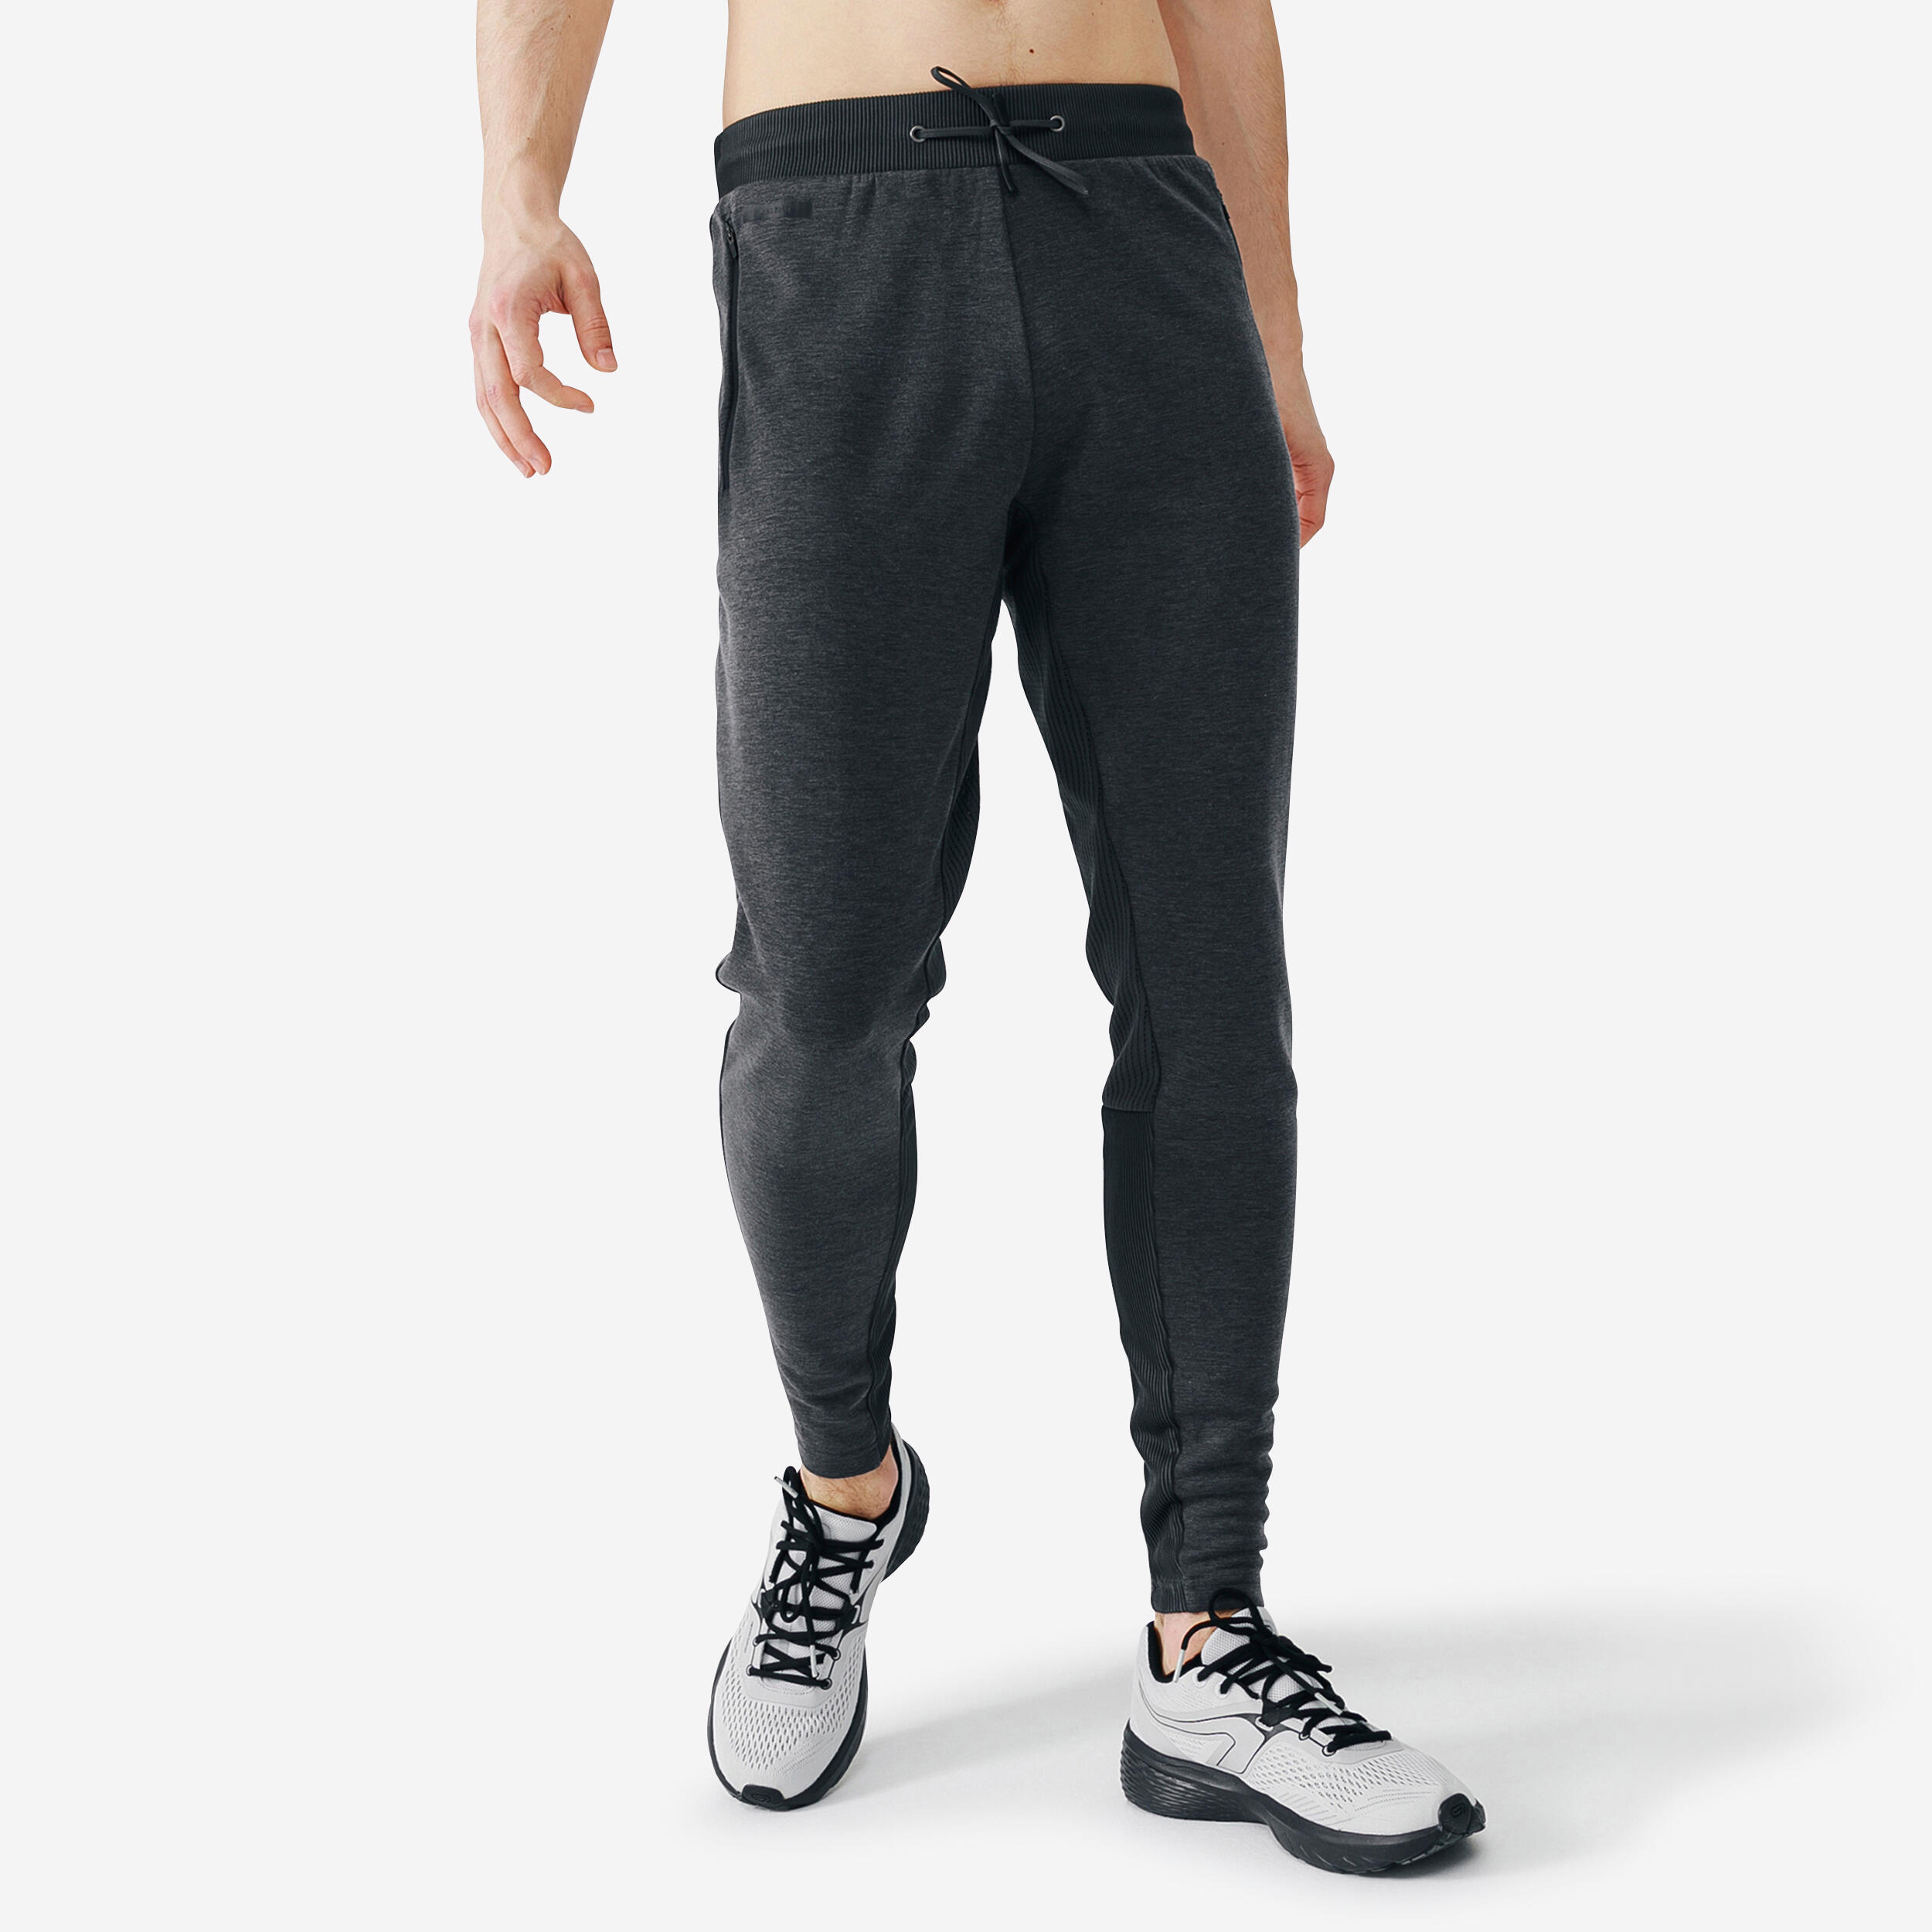 Nike Wild Run Men's Running Pants BV5576-498 Red/Volt; Size Large | eBay